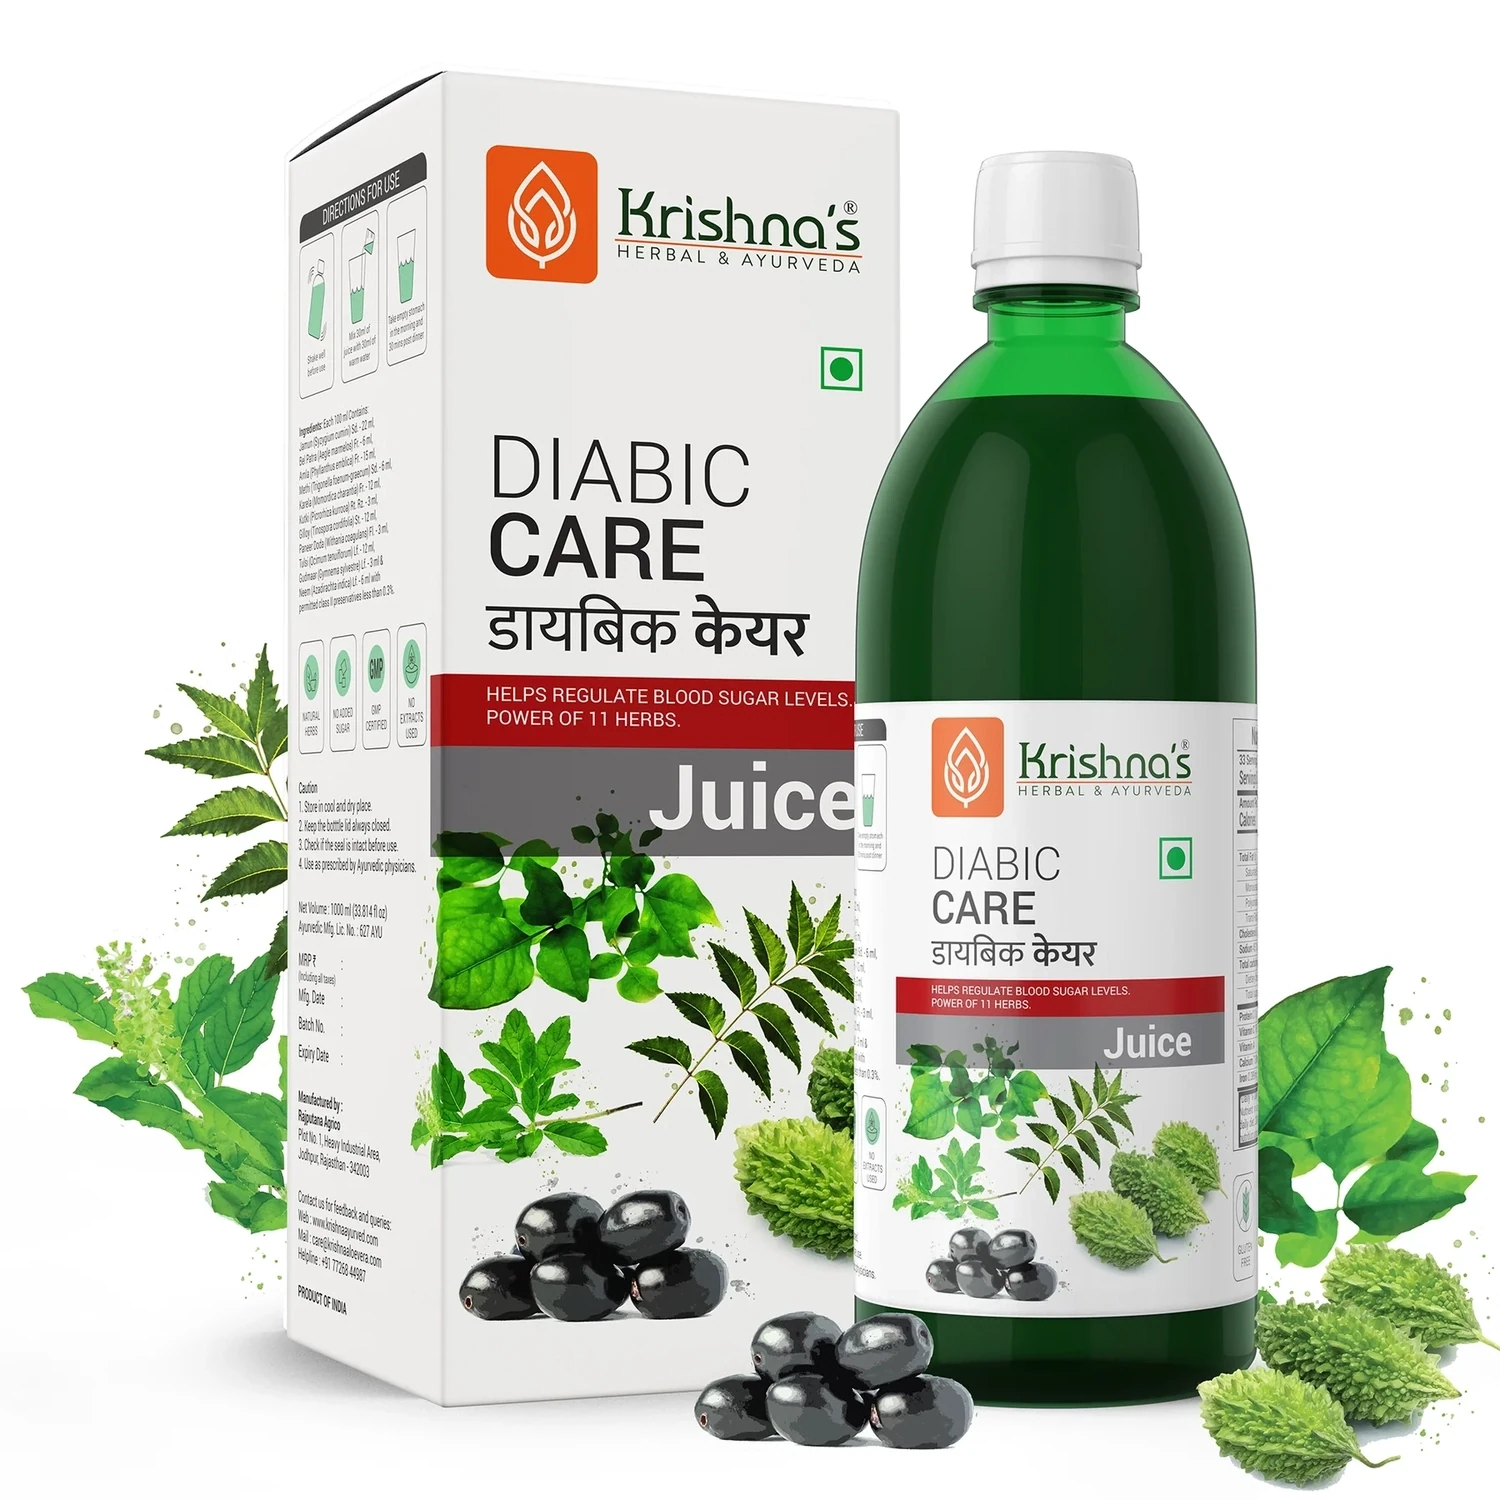 Krishna's Diabic Care Juice | Manage Diabetes